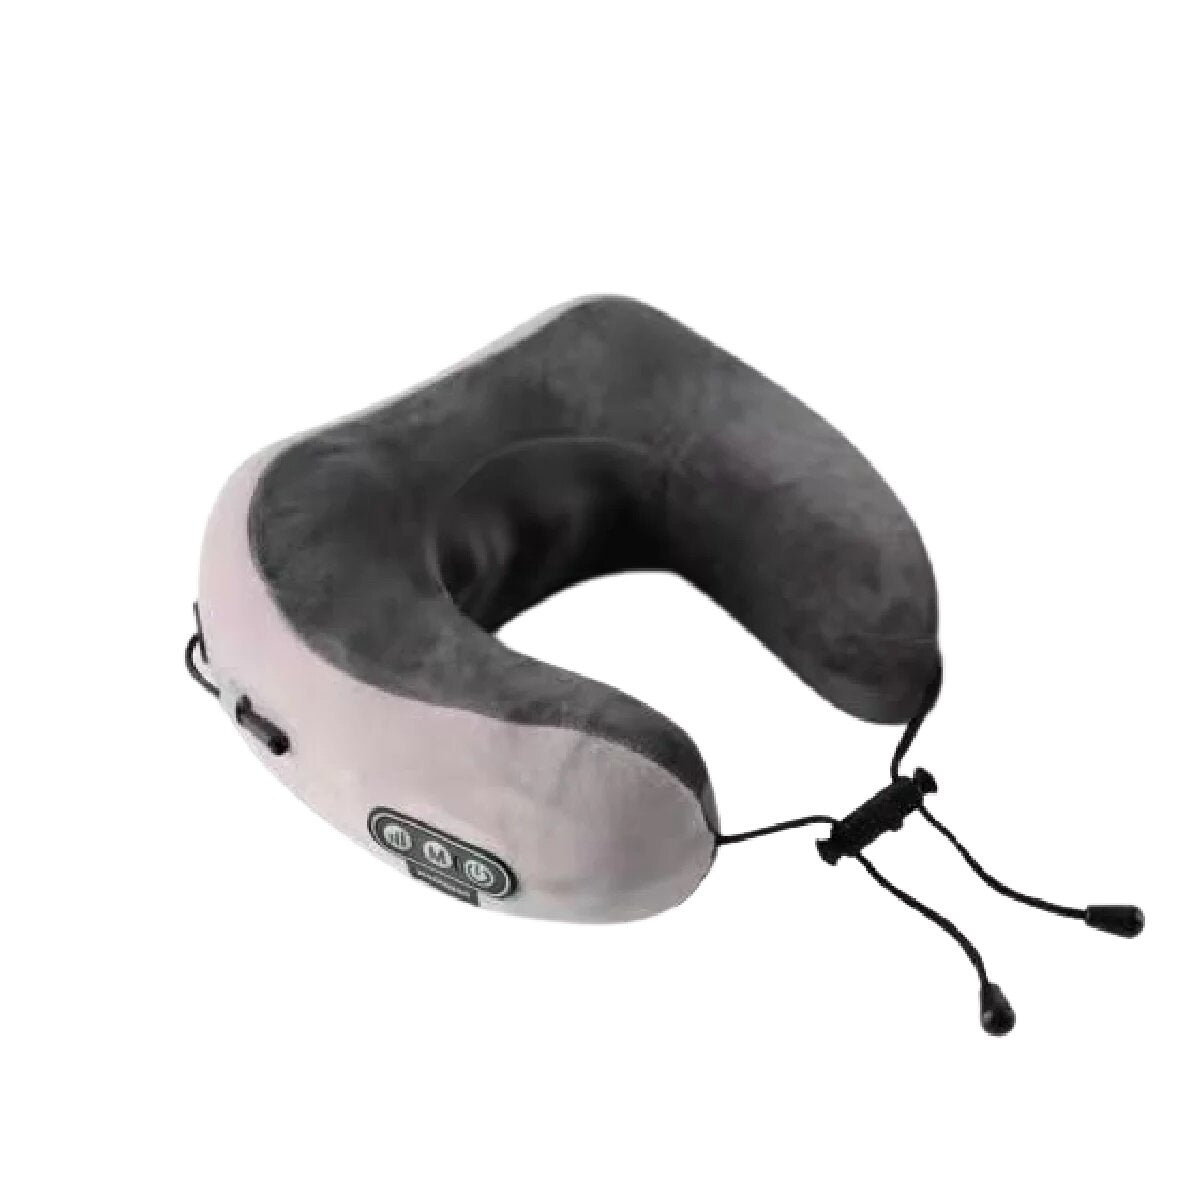 Mediness - Multifunctional U-shaped massage pillow | Travel neck pillow | Neck massager MD-00